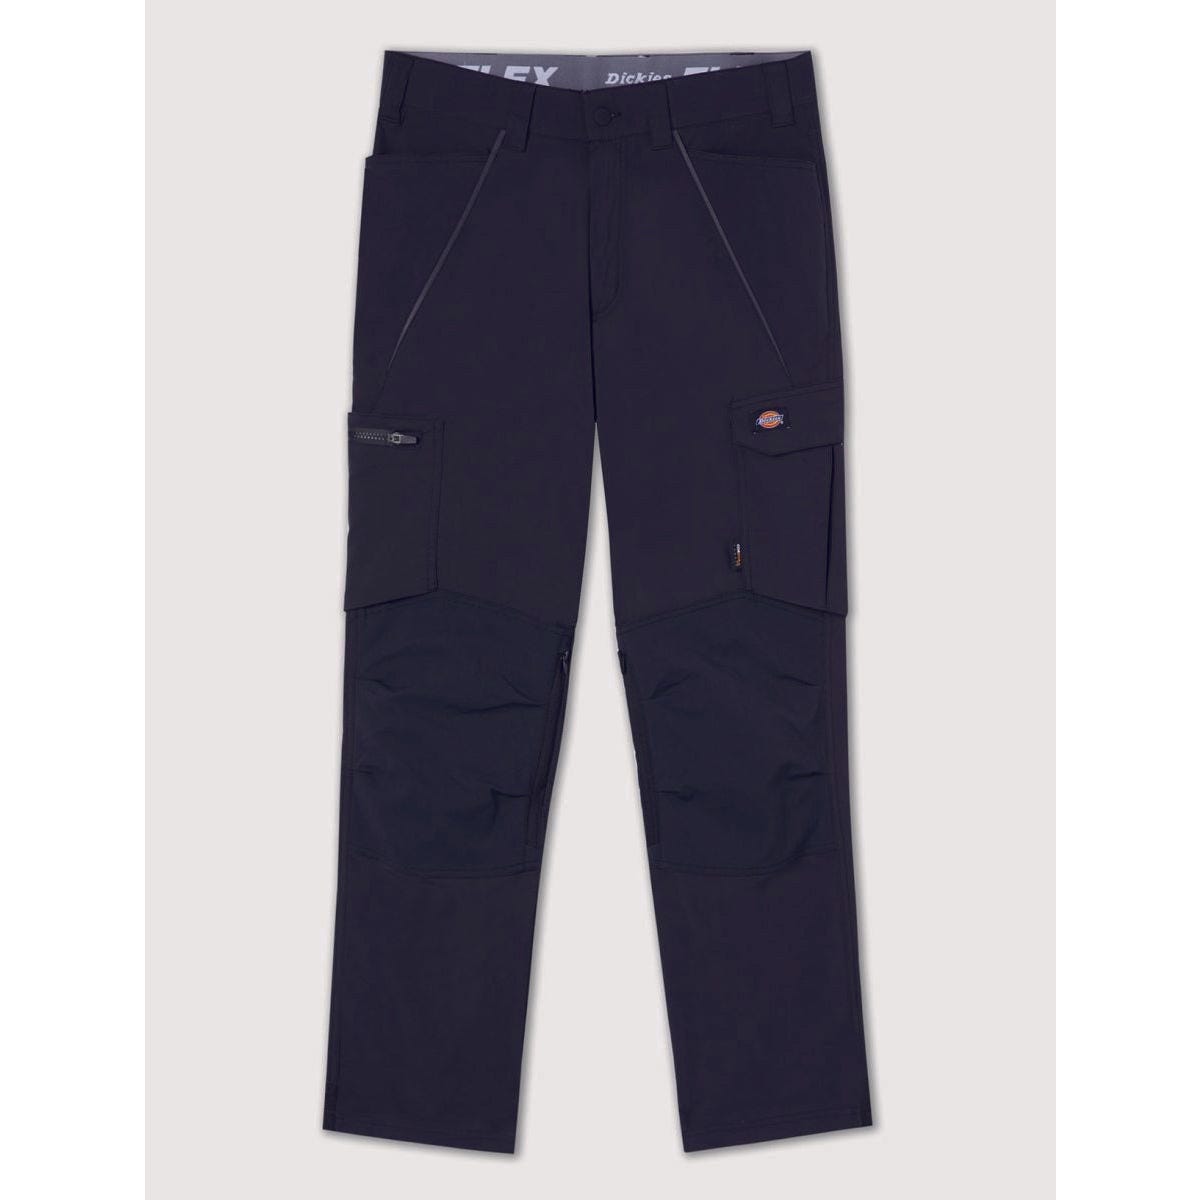 Pantalon léger Flex Noir - Dickies - Taille 46 5